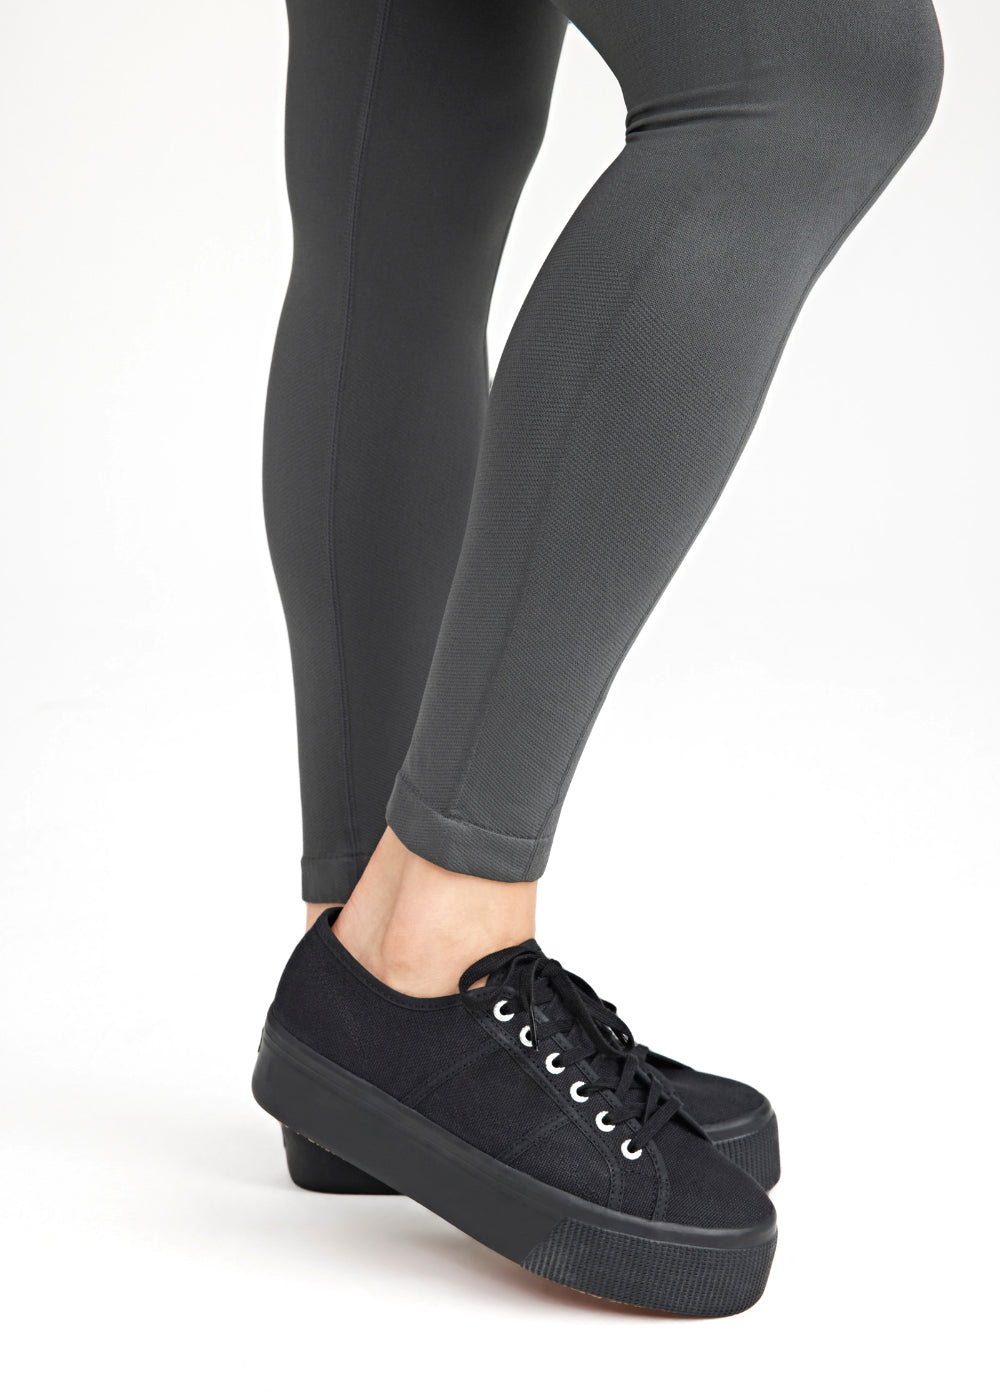 YUMMIE Jett Castlerock Grey Full Length Shaping Leggings Womens S / M / L /  XL